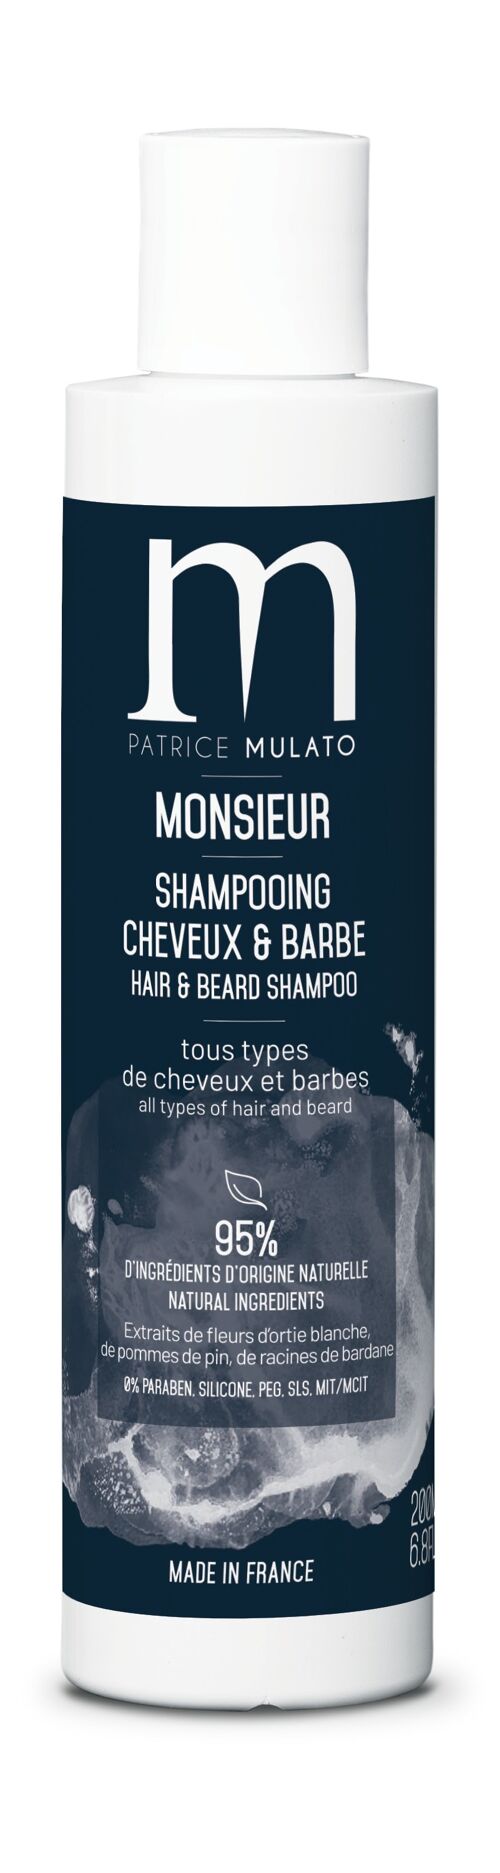 MONSIEUR Shampooing cheveux & barbe 200ML